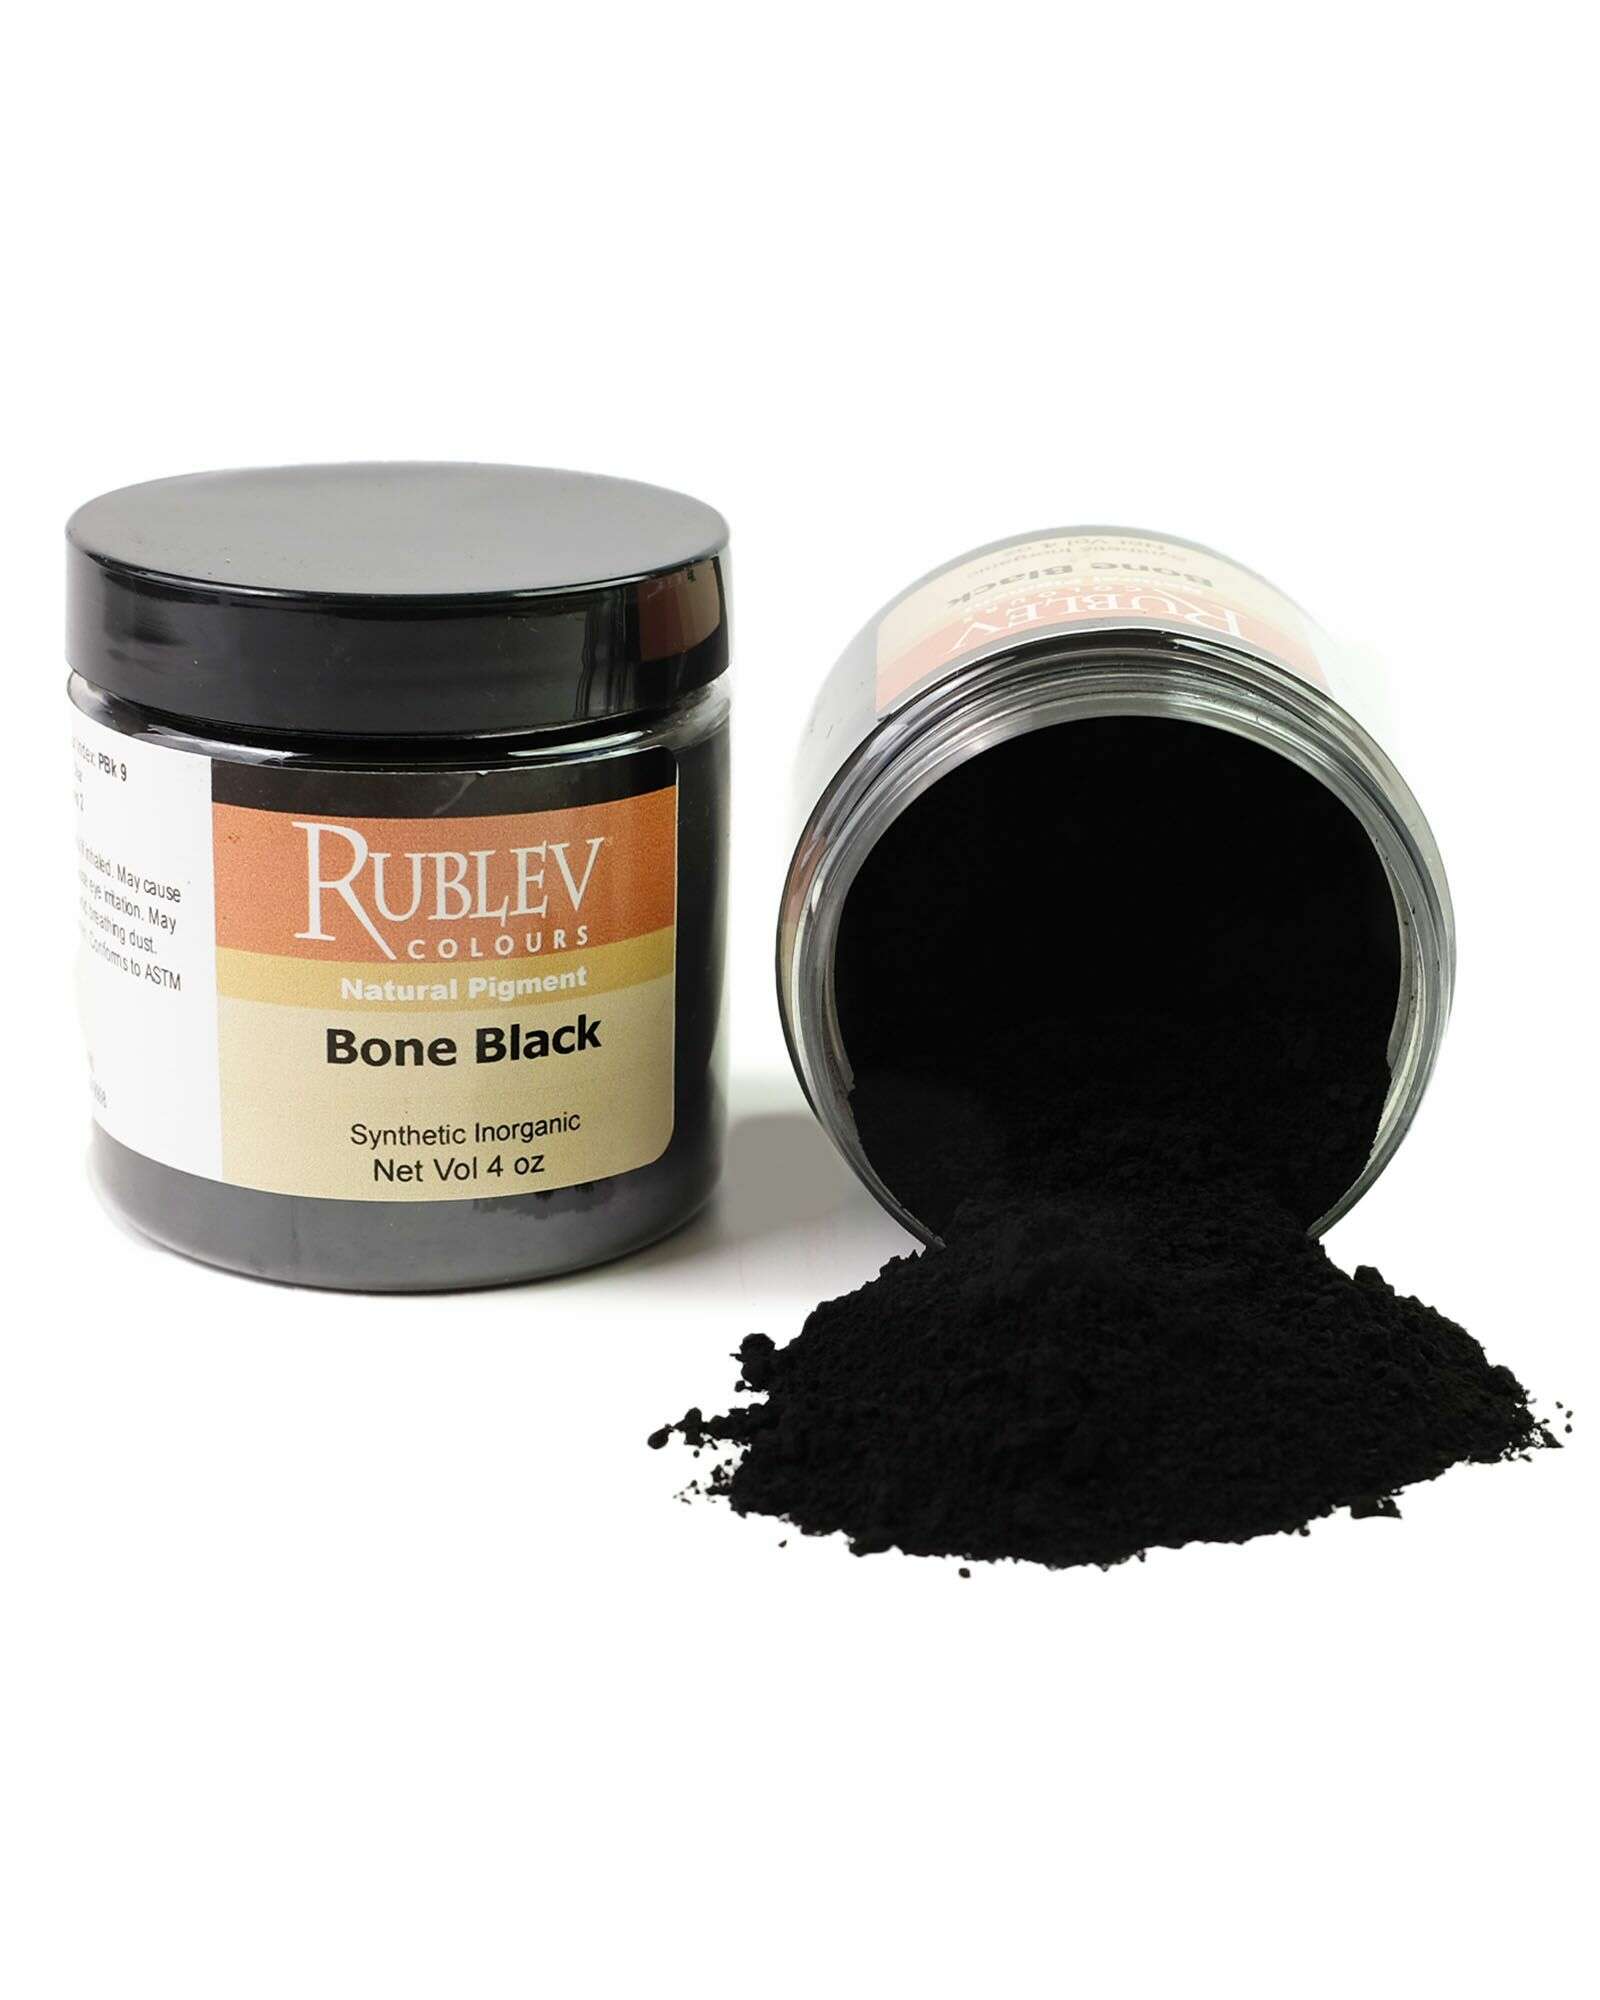 Shop Natural Pigments - Dark Drying Black Oil, Rublev Colours Dark Drying (Black  Oil)